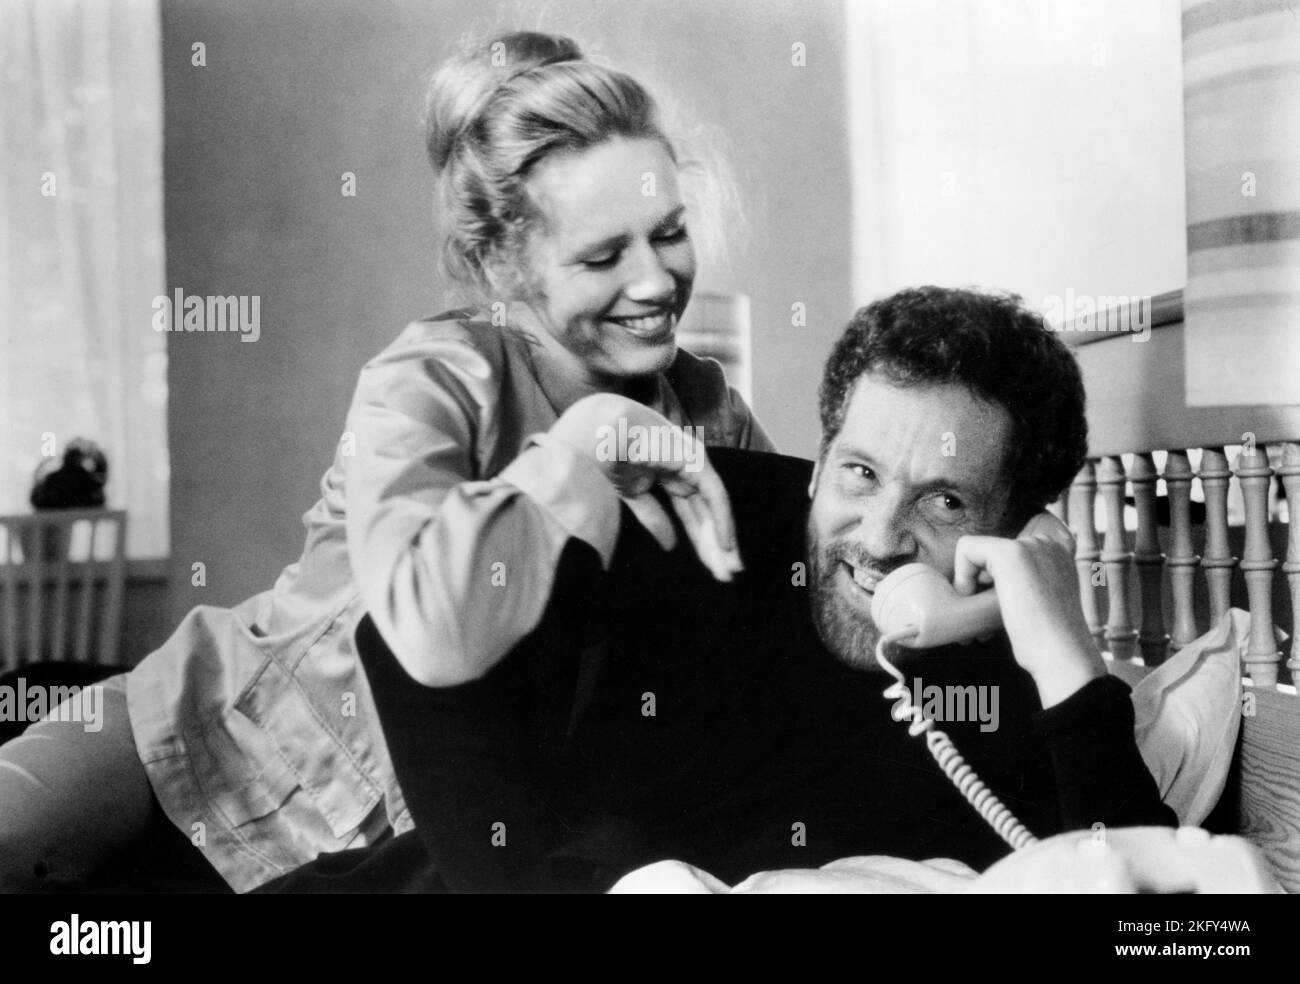 Liv Ullmann, Erland Josephson, on-set of the Swedish Television Miniseries and Film, 'Scenes From A Marriage', Swedish Title: Scener ur ett aktenskap, Cinema 5 Distribution, 1973 Stock Photo